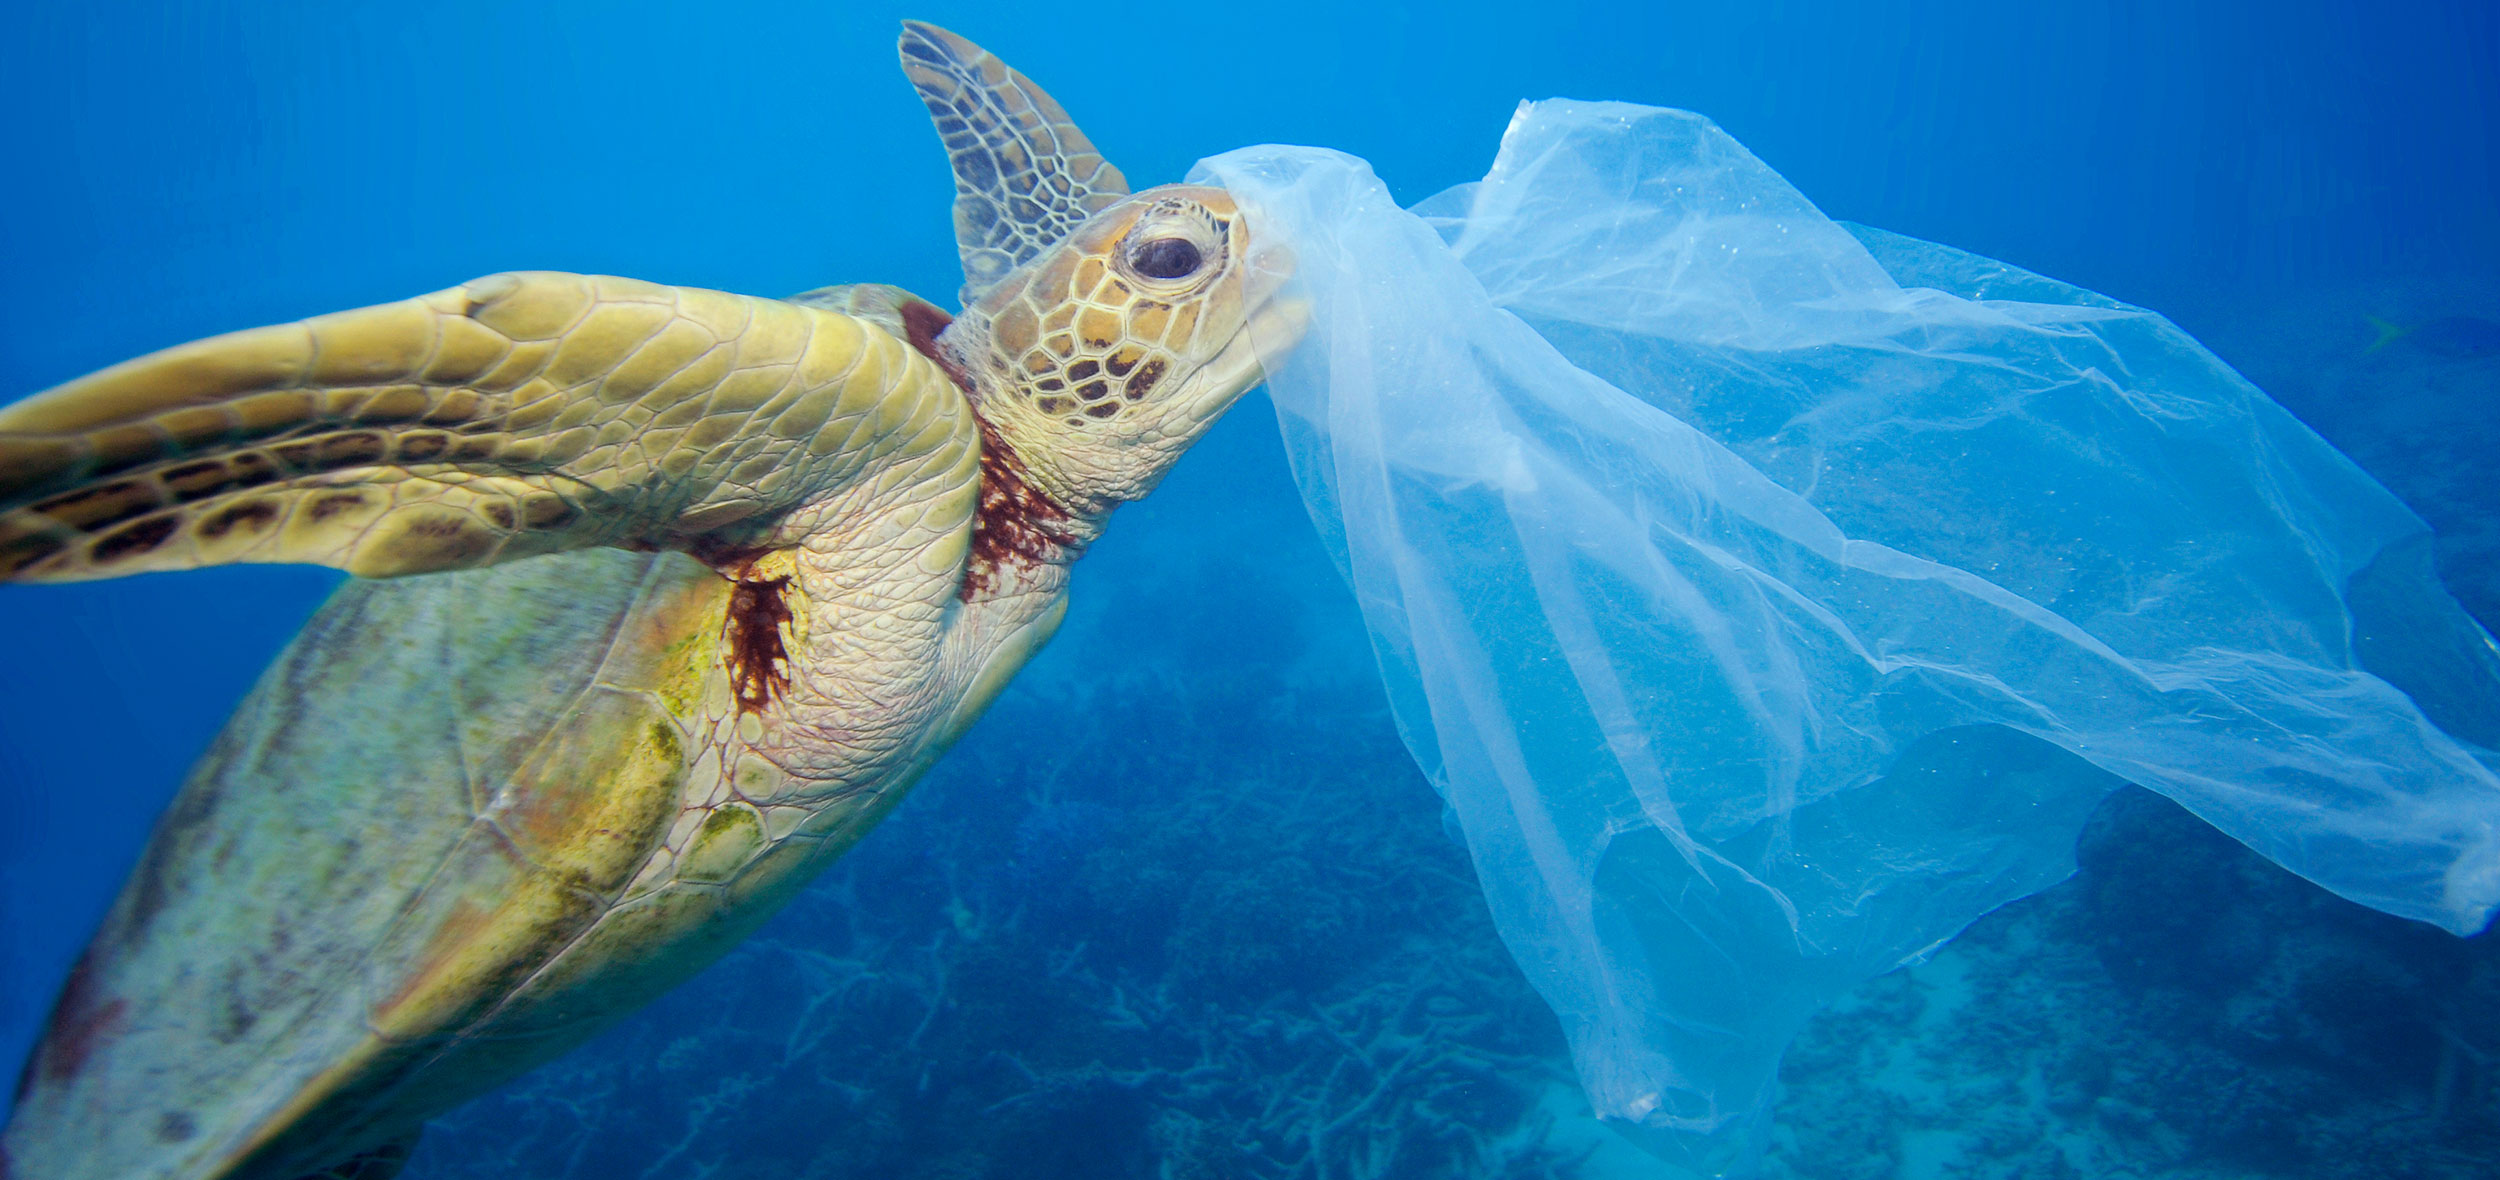 Meeresschildkröten sind von Plastikmüll bedroht © Solvin Zankl / Alamy Stock Photo